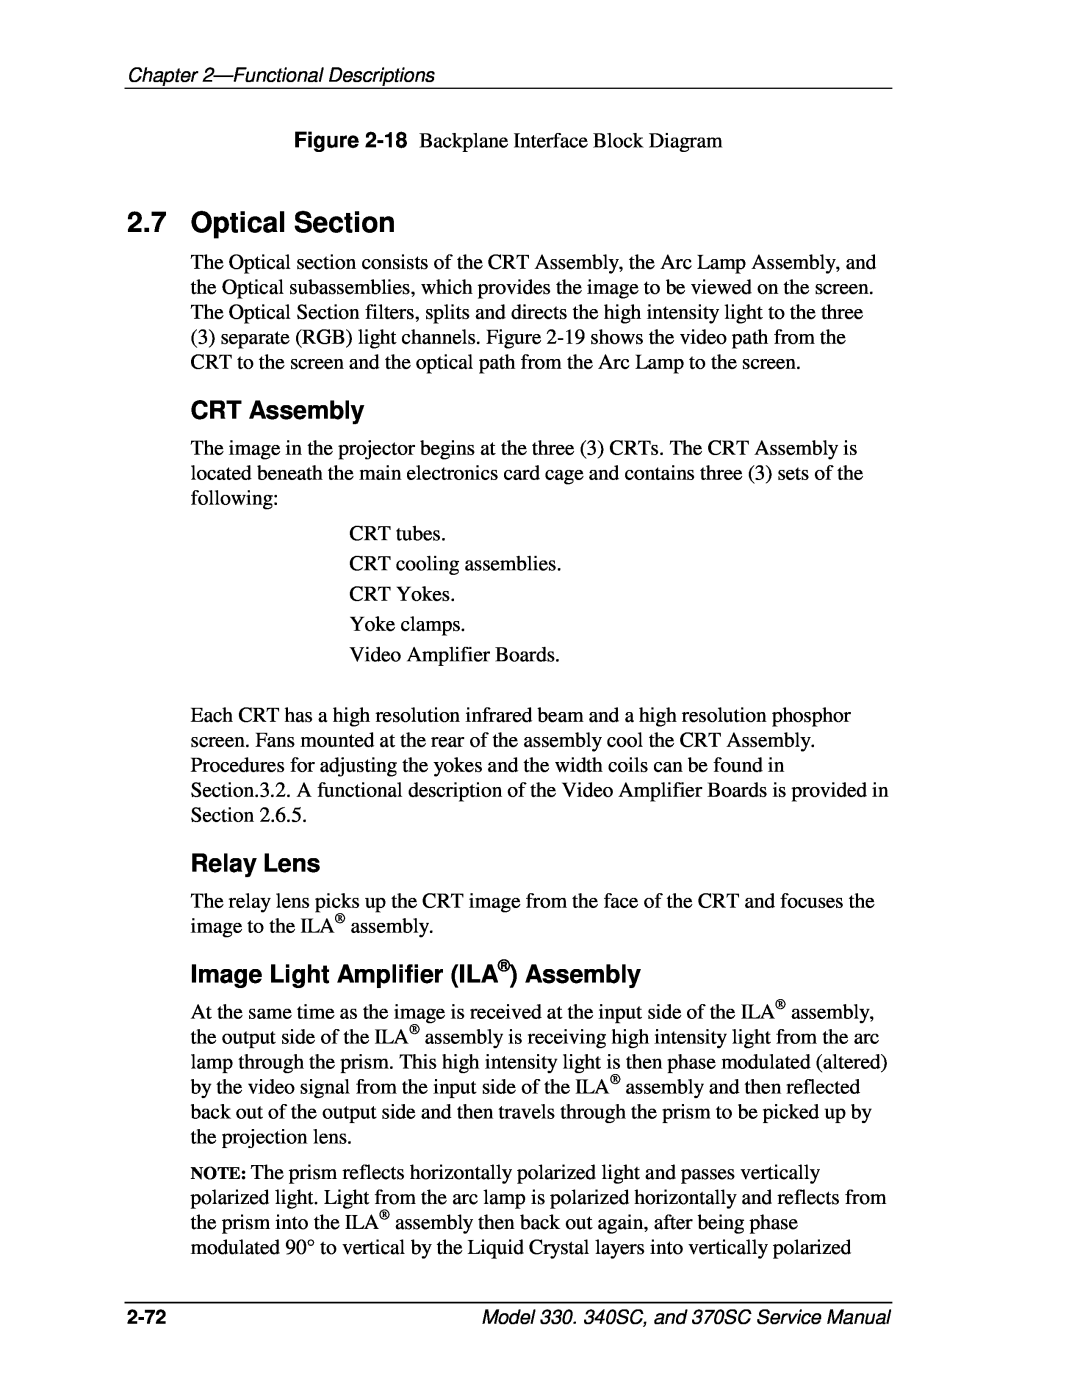 JVC 330, 370 SC, 340 SC service manual Optical Section, CRT Assembly, Relay Lens, Image Light Amplifier ILA Assembly 